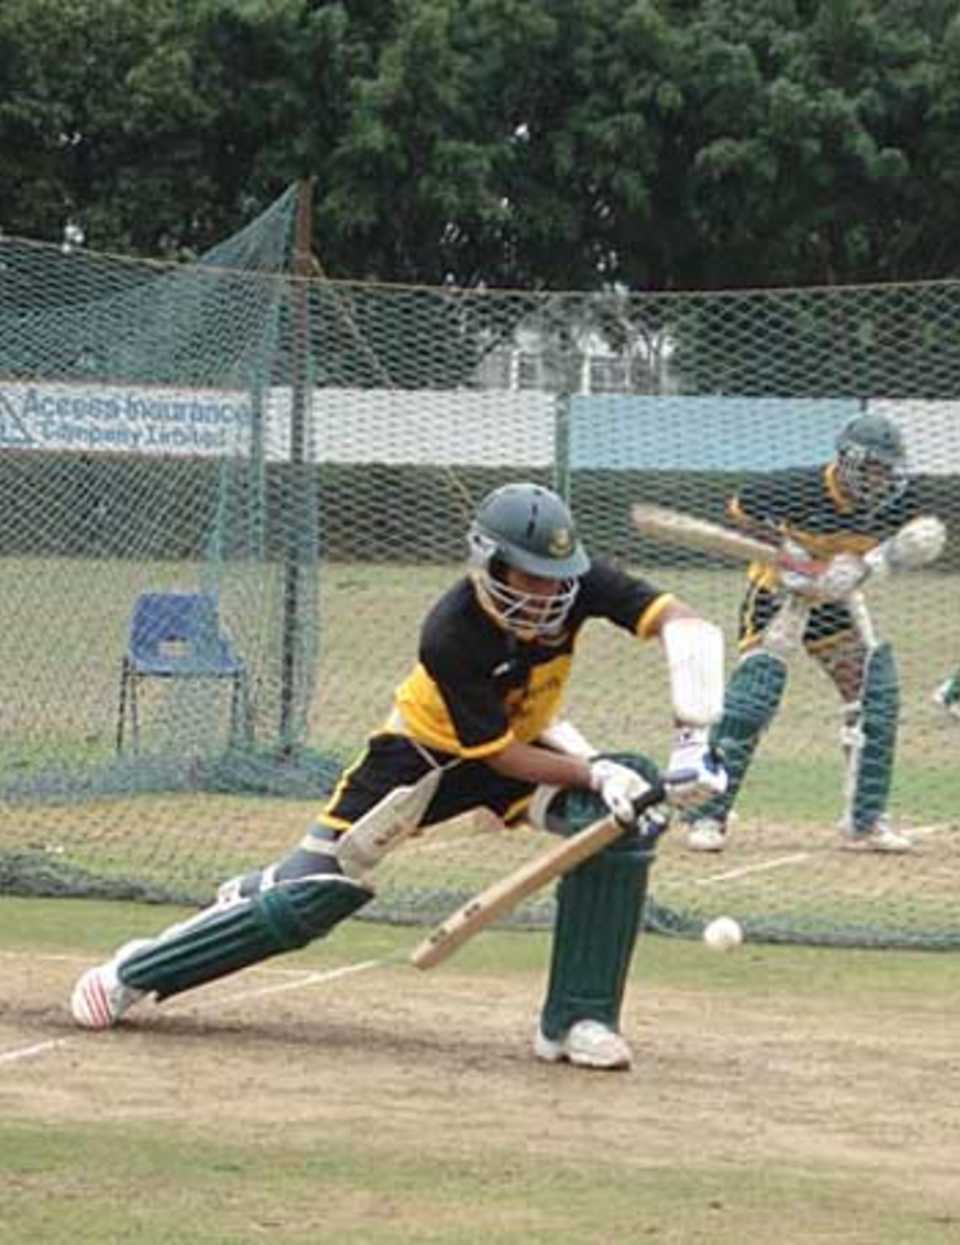 Tushar Imran batting at the Ruaraka Sports Club 